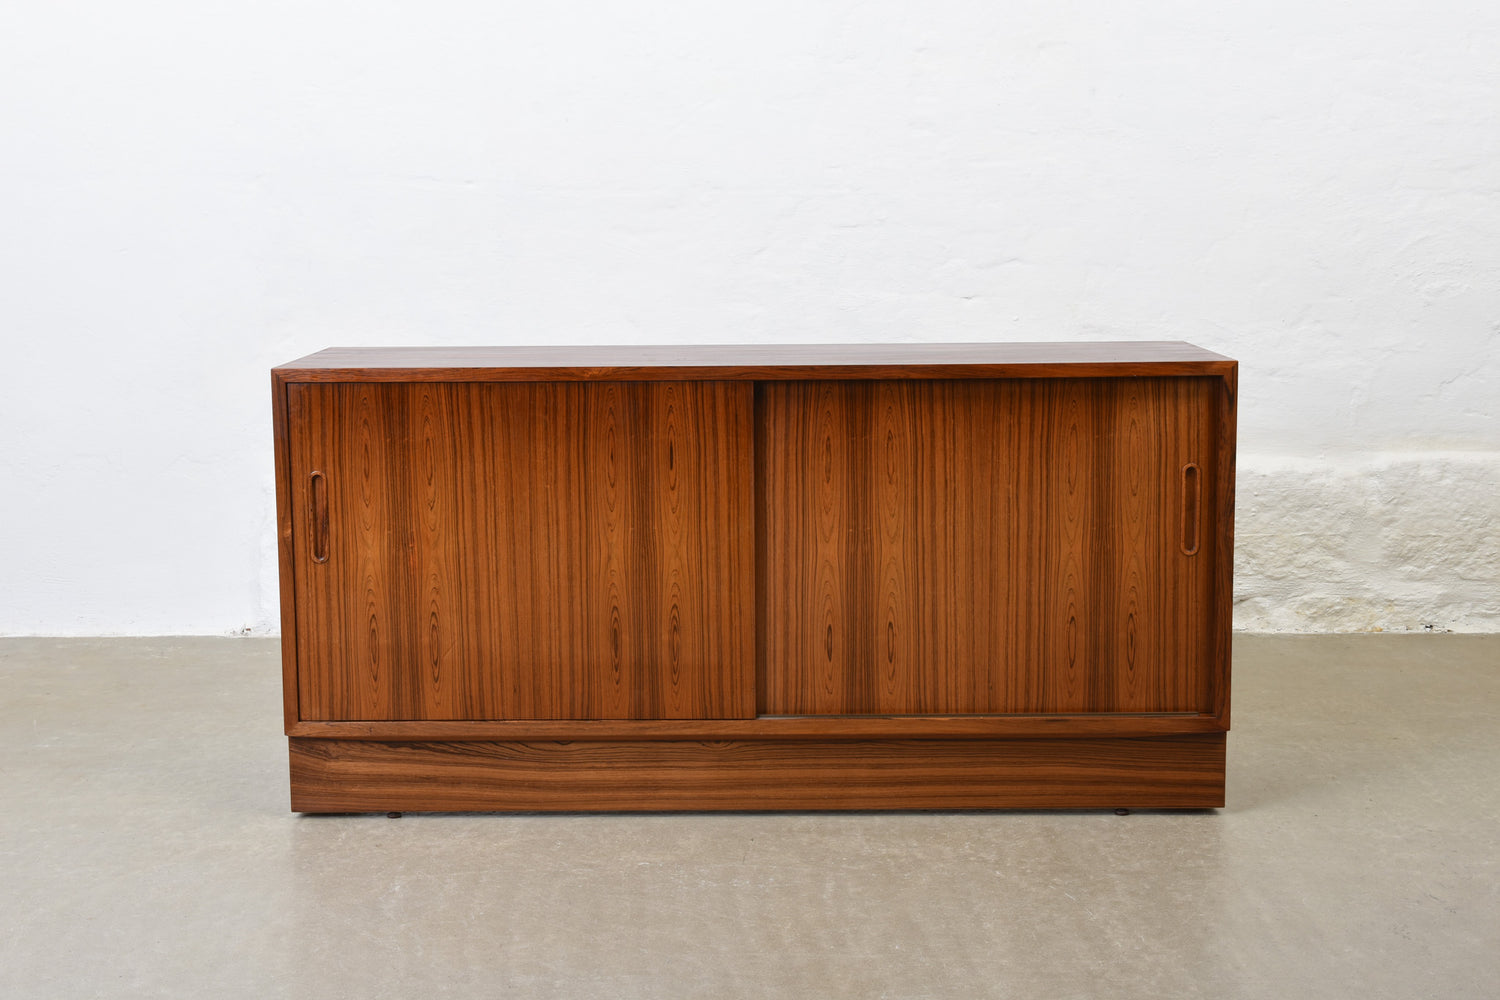 1960s rosewood sideboard by Carlo Jensen - 138L cm